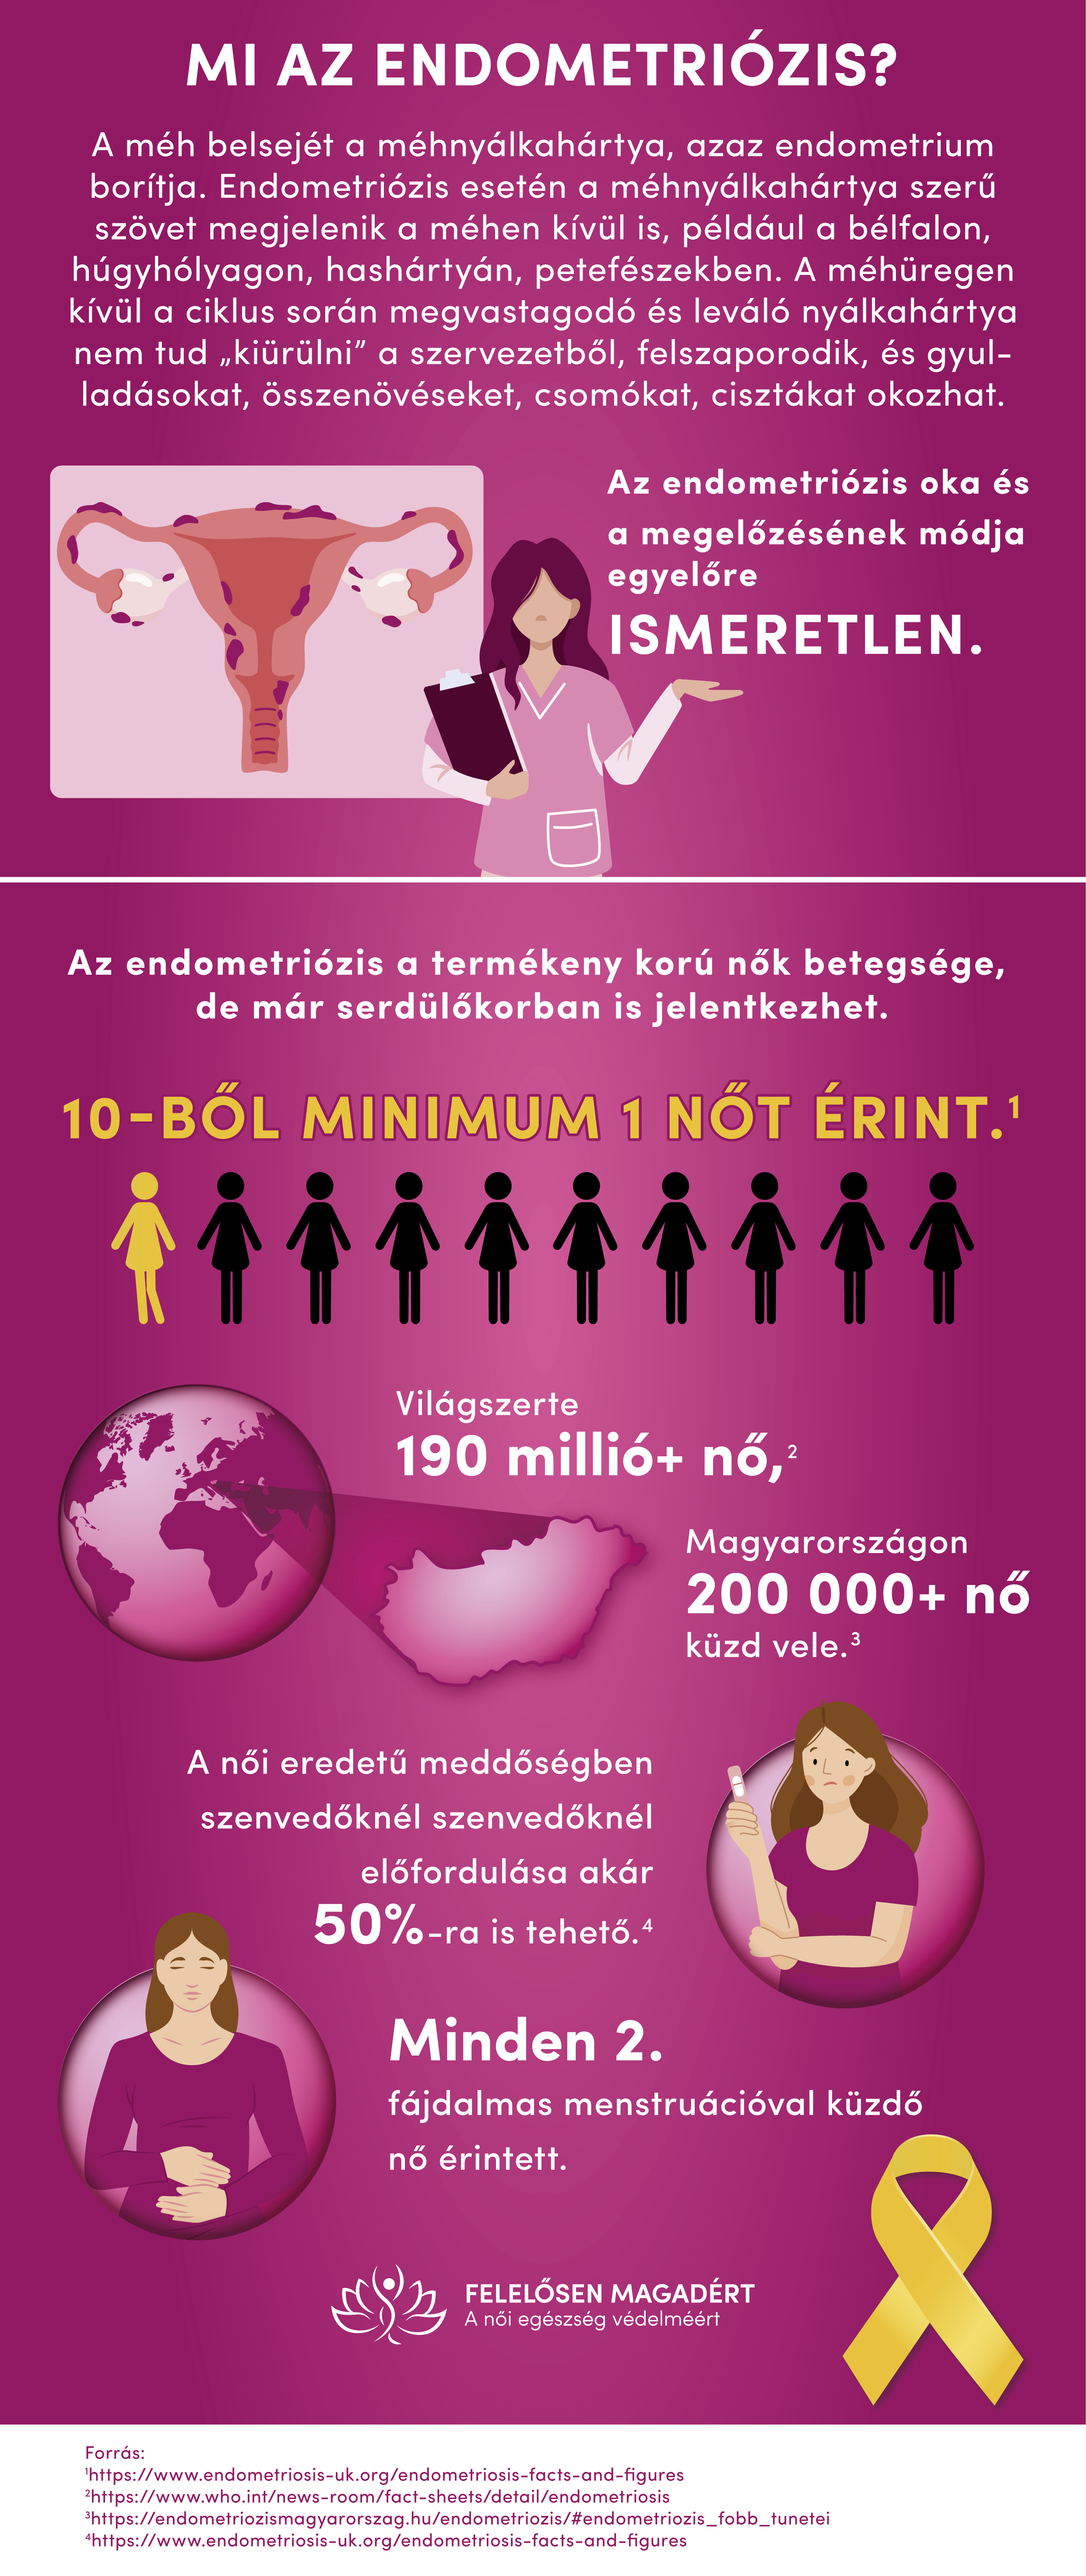 FEME Endometriozis infografika 231006 02